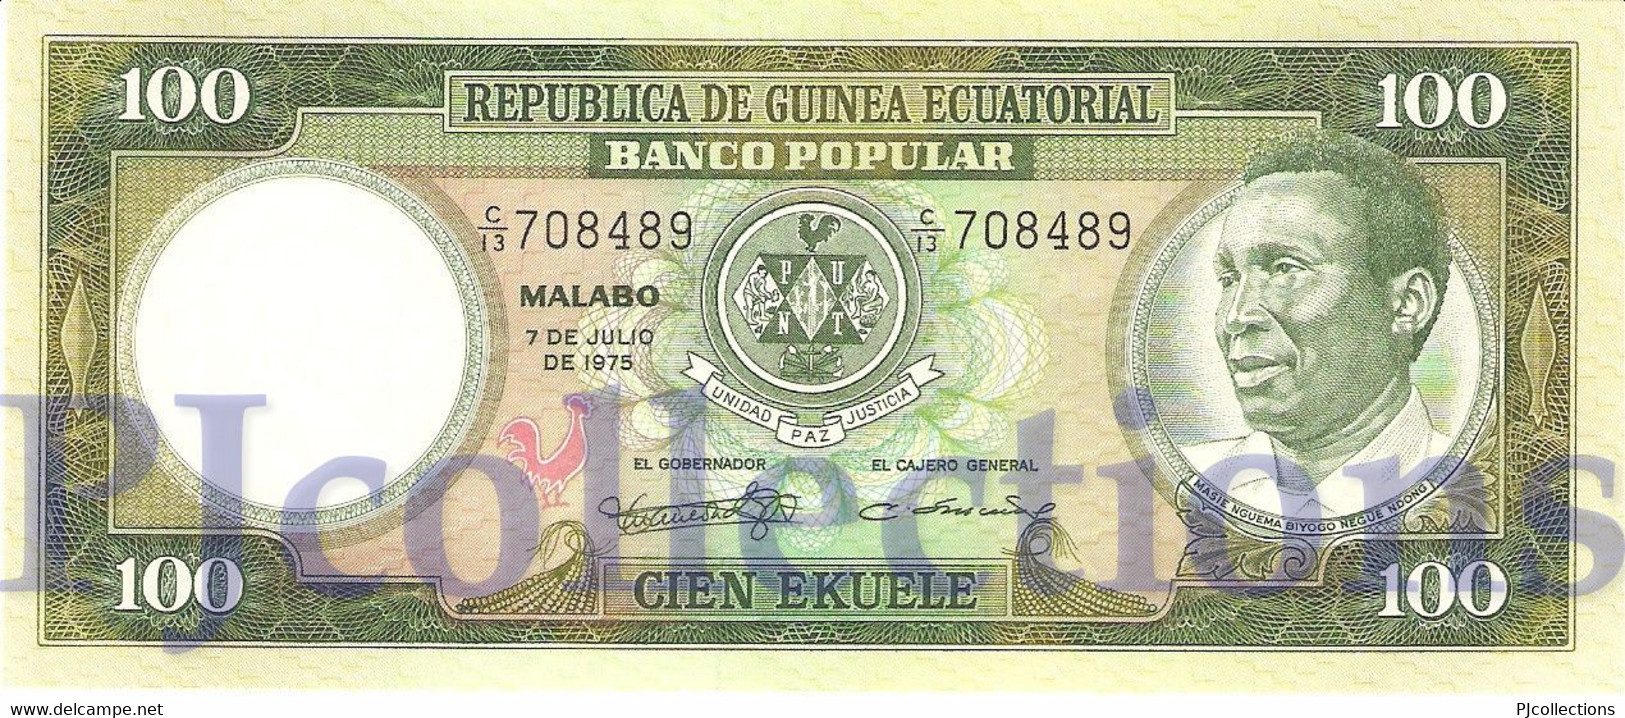 EQUATORIAL GUINEA 100 EKUELE 1975 PICK 11 AUNC - Equatorial Guinea